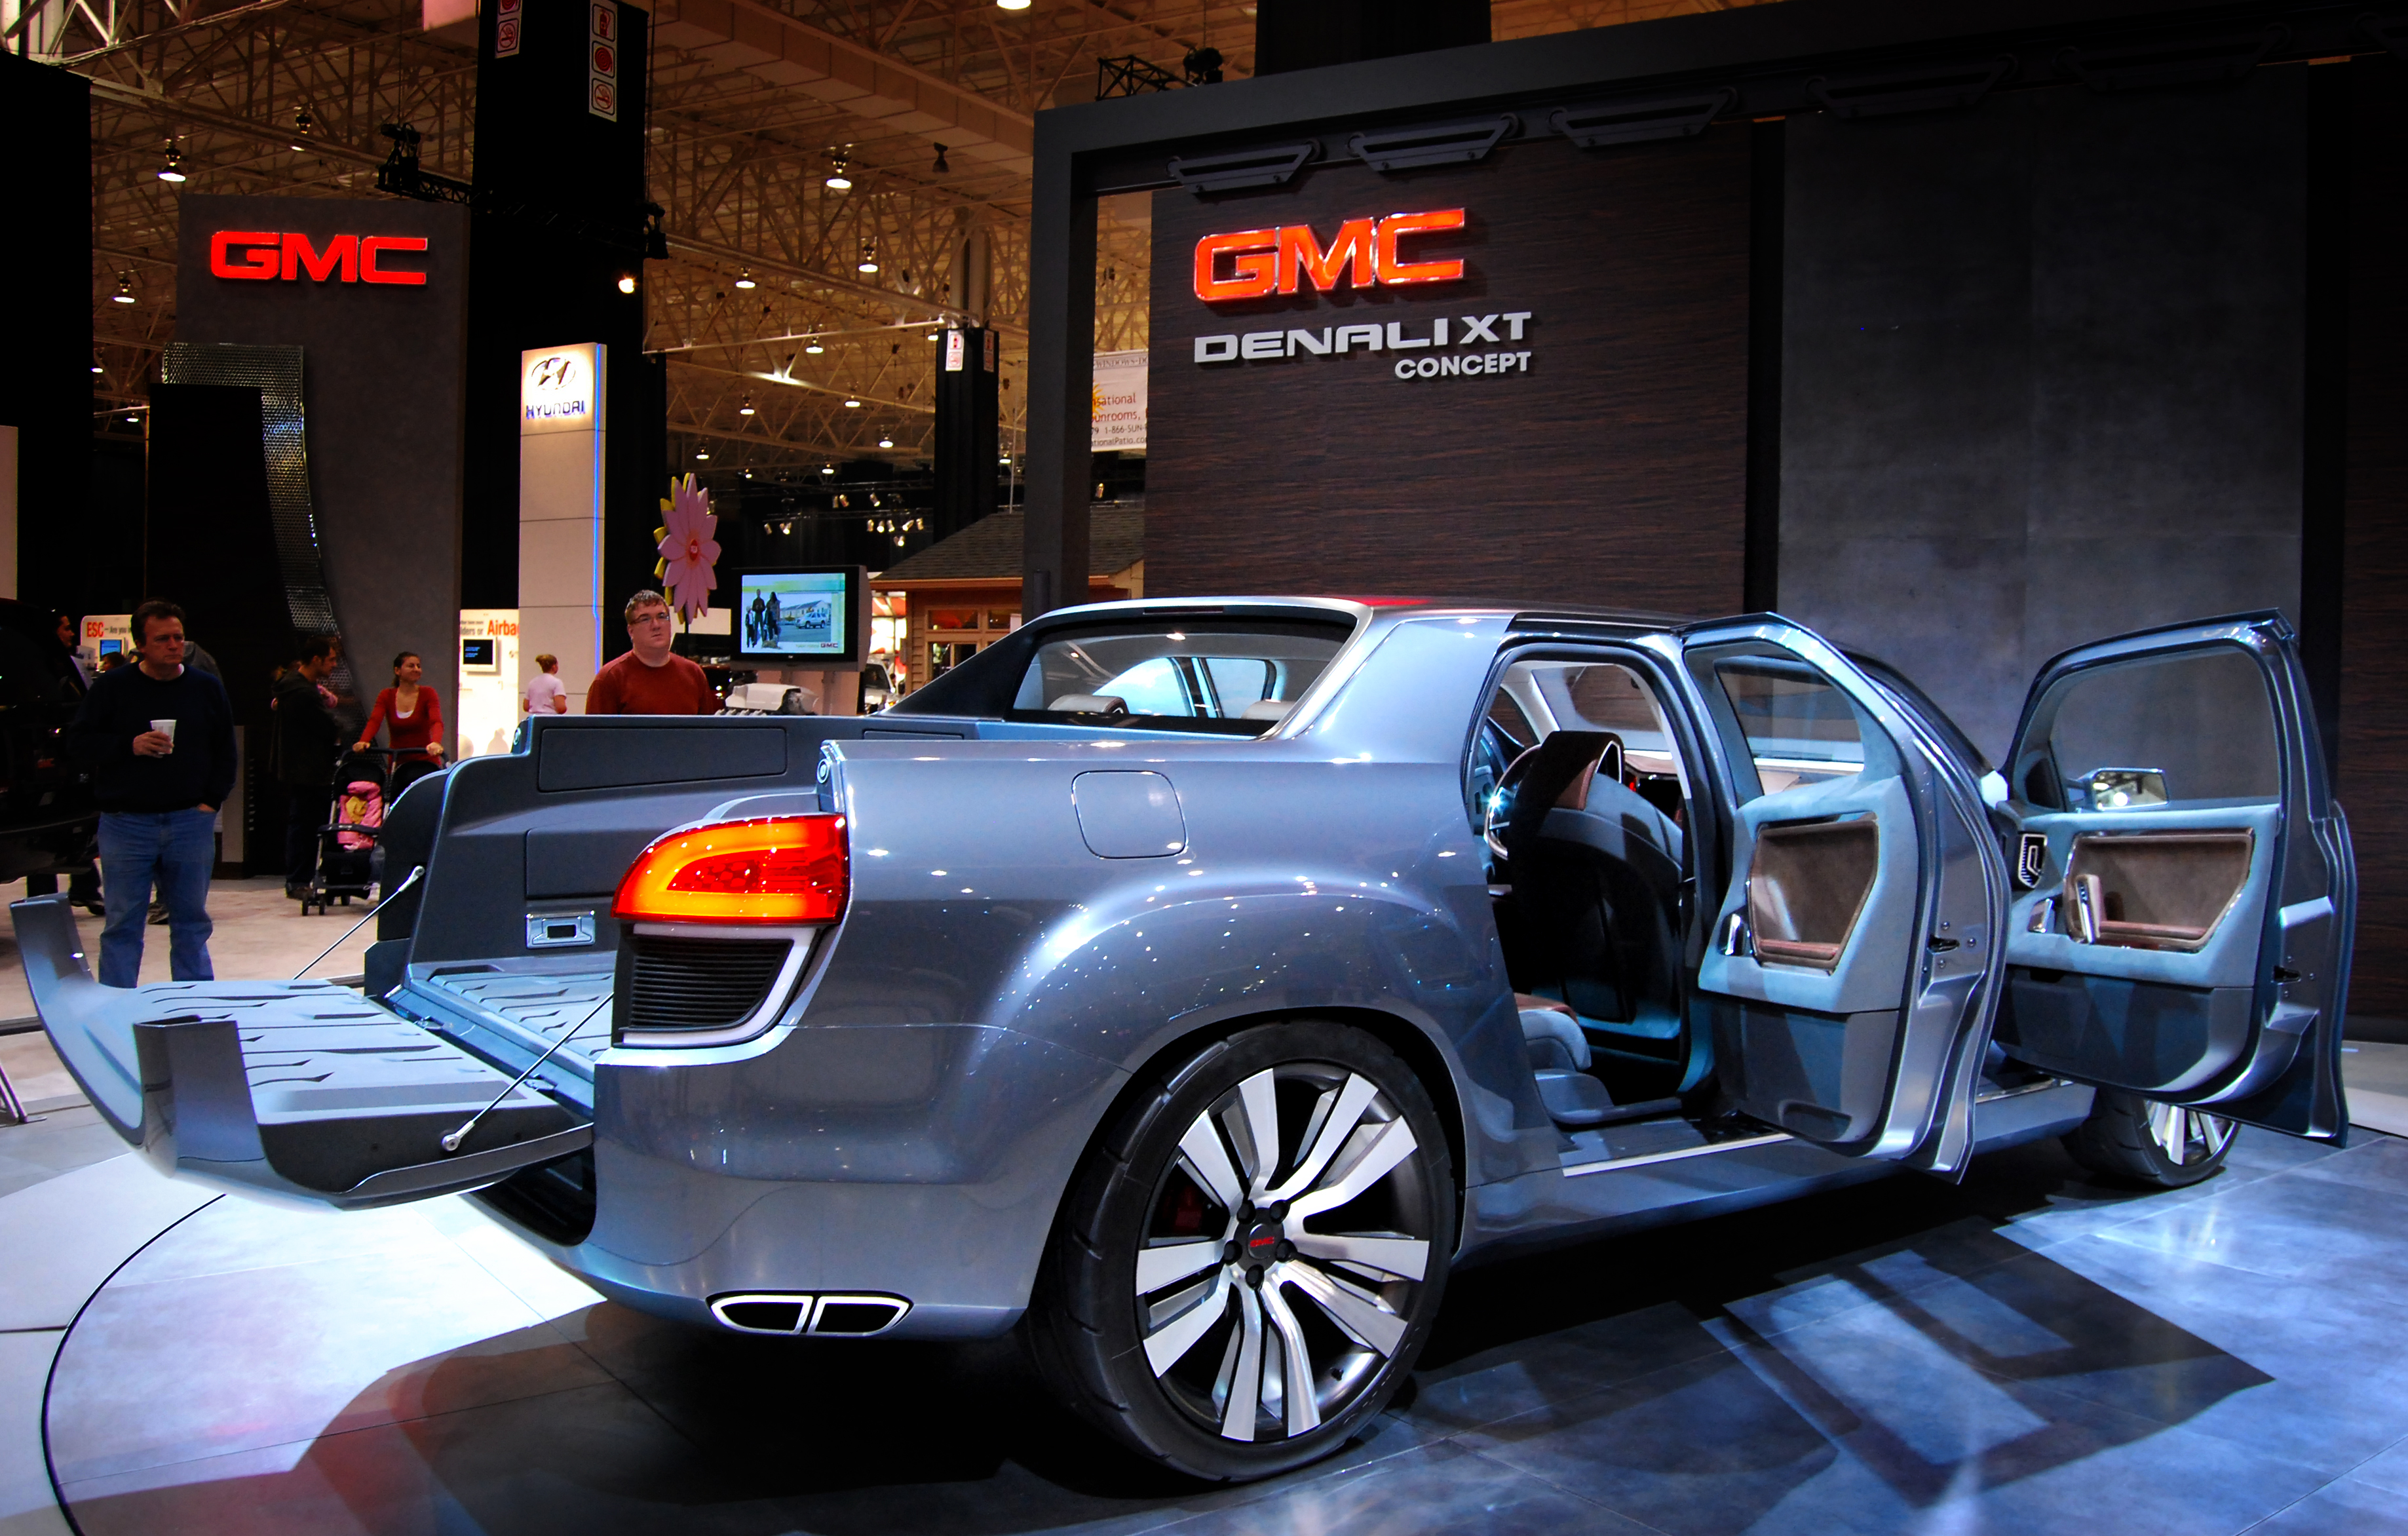 GMC Denali XT concept at the Cleveland Auto Show | Flickr - Photo ...